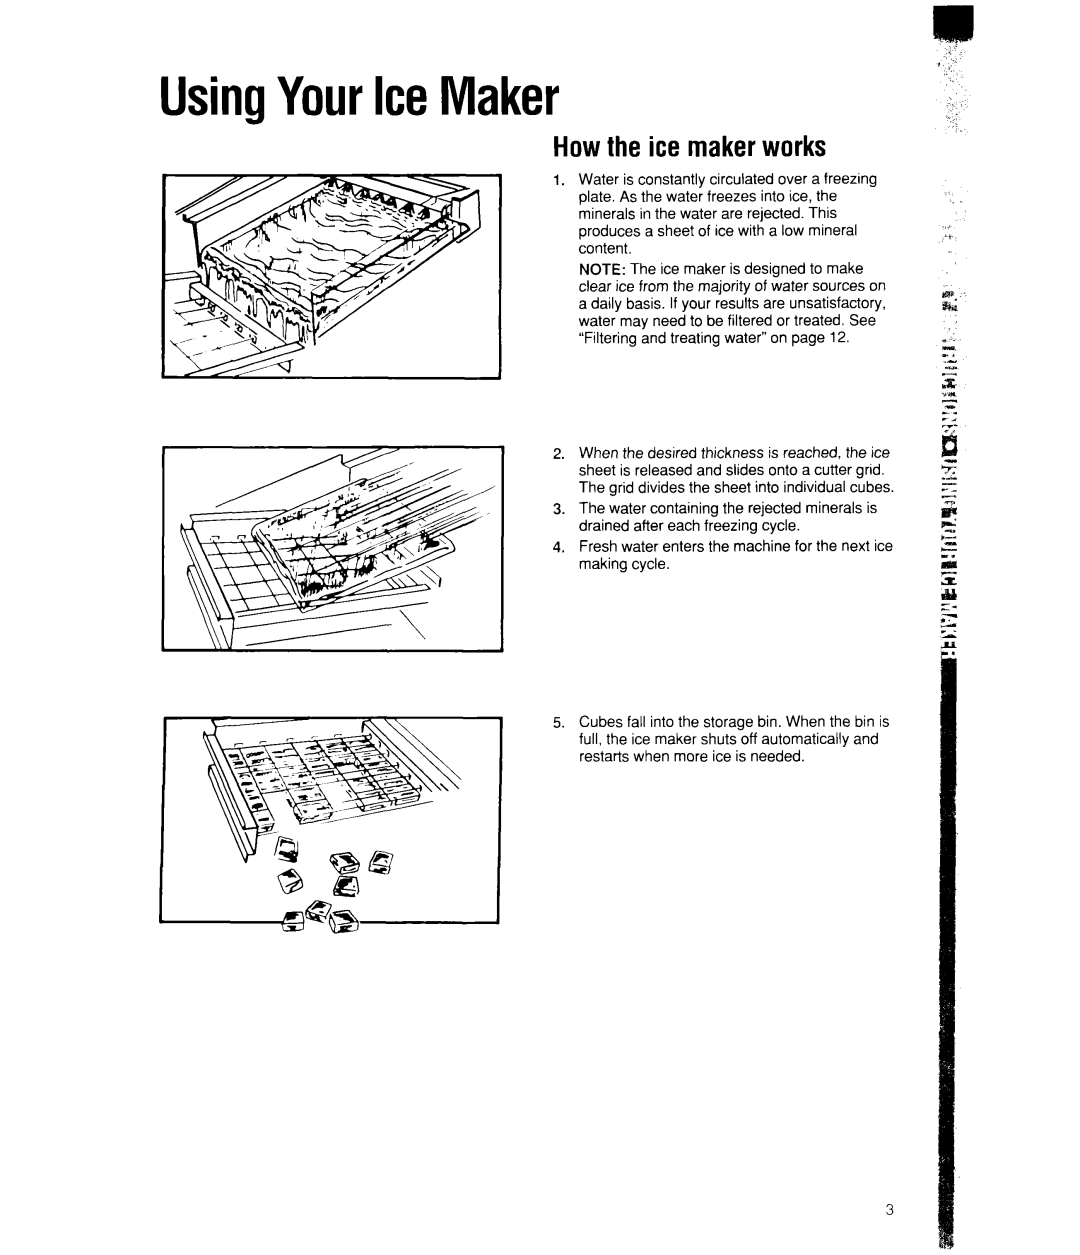 Whirlpool EC510 manual UsingYourIceMaker, Howthe ice makerworks 